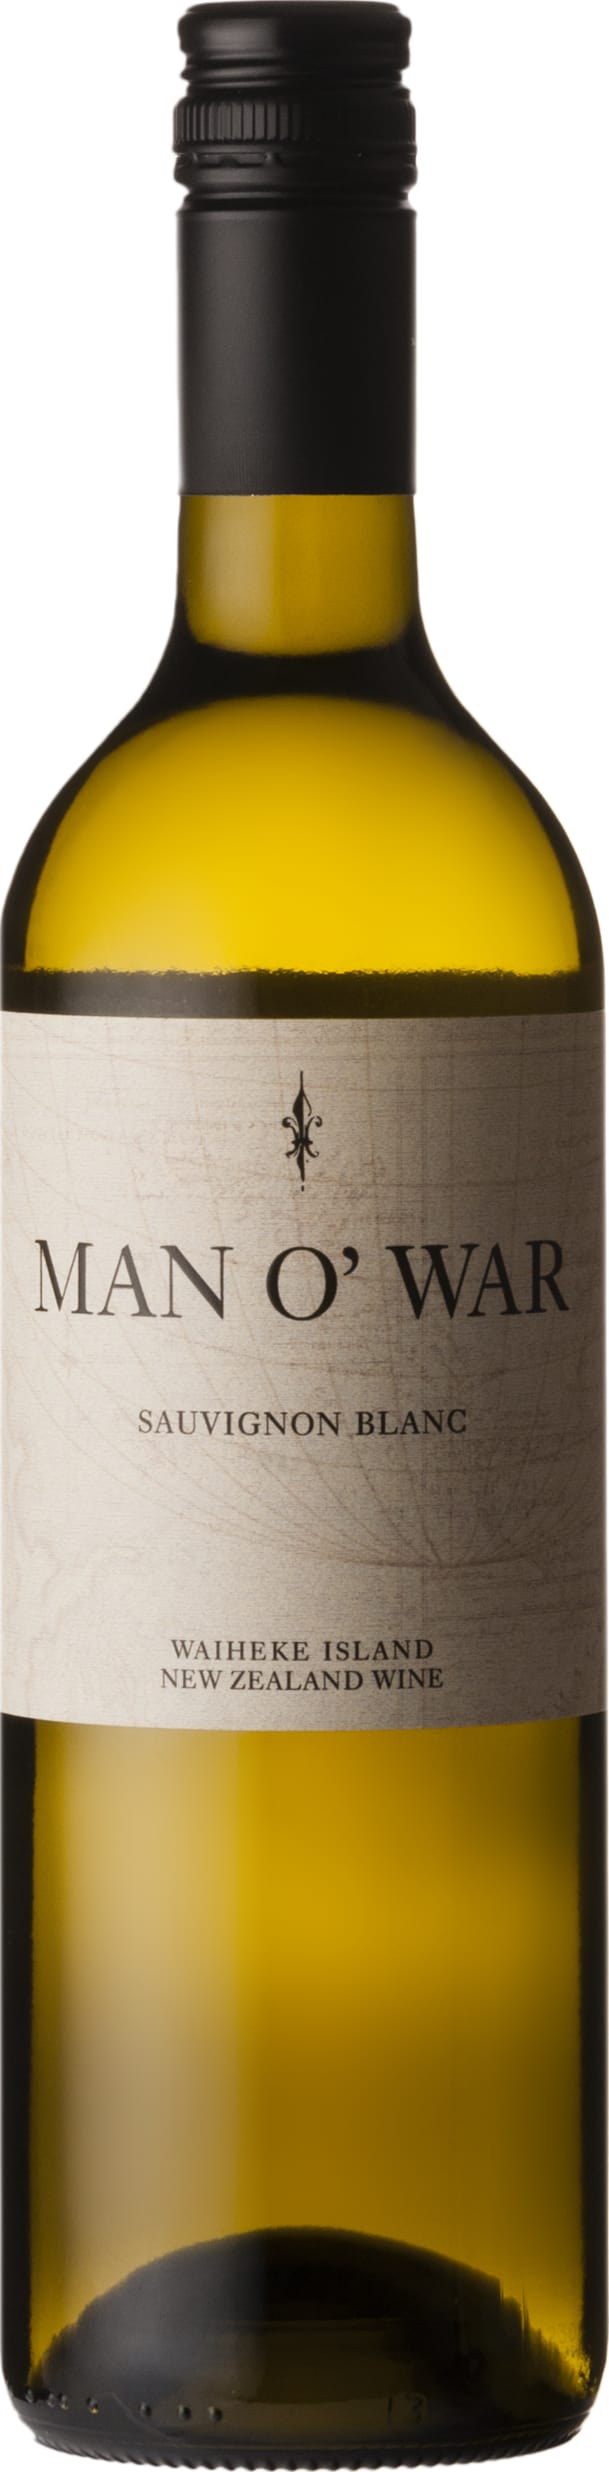 Man O' War Estate Sauvignon Blanc 2021 75cl - Buy Man O' War Wines from GREAT WINES DIRECT wine shop